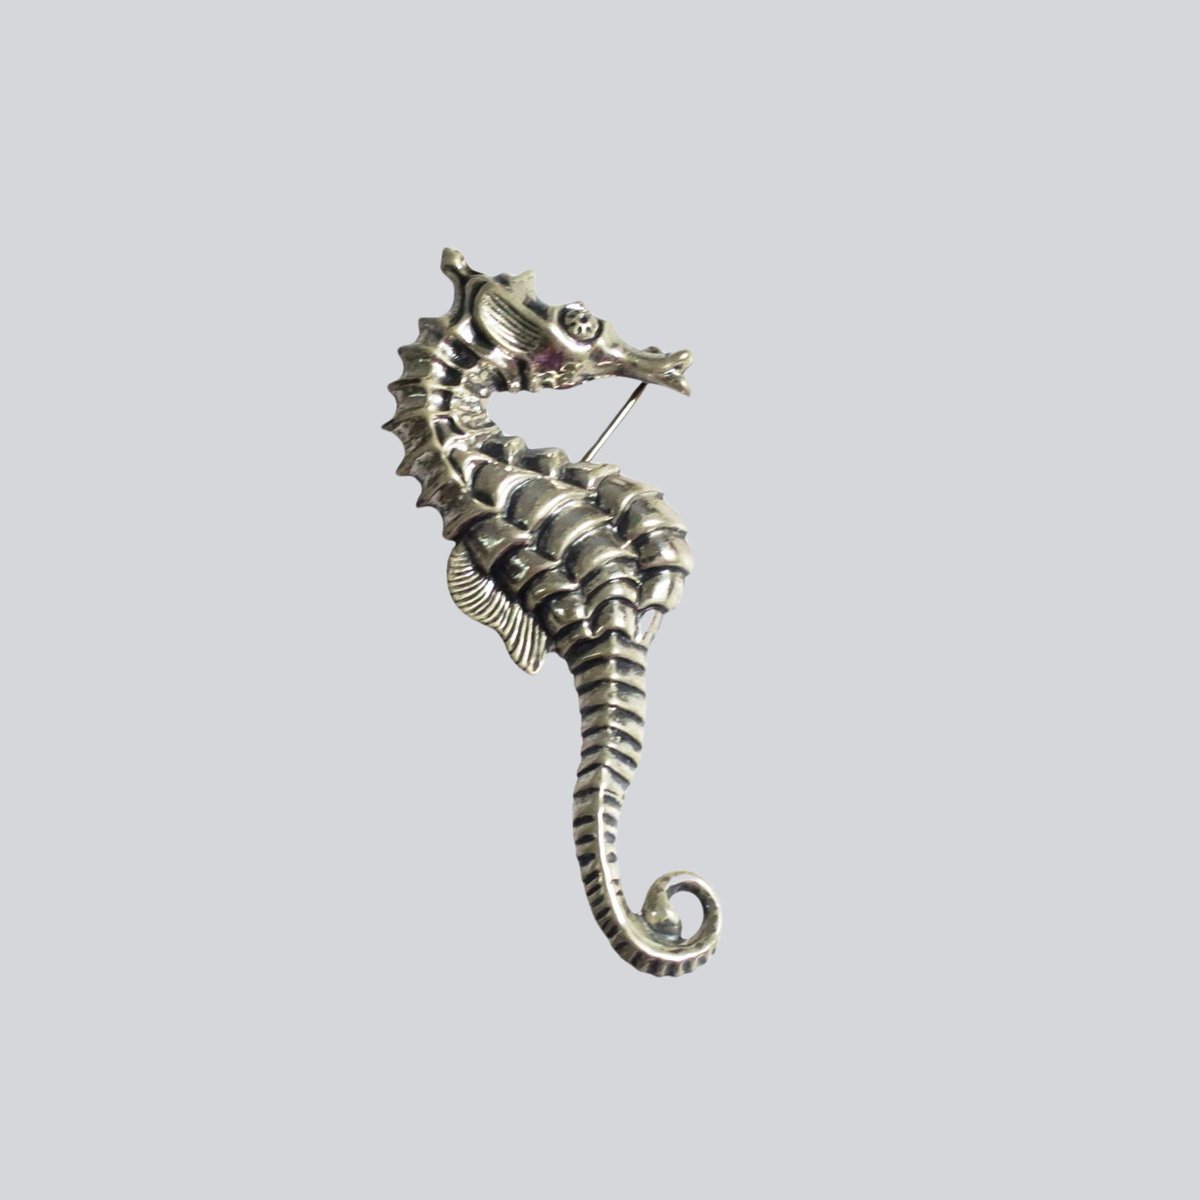 Vintage Sterling Silver Seahorse by Beau Craft .925, Vintage Pin,  Hatpin Accessories tuppu.net/f75ab0f7 #SMILEtt23 #SwirlingO11 #epiconetsy #EtsyTeamUnity